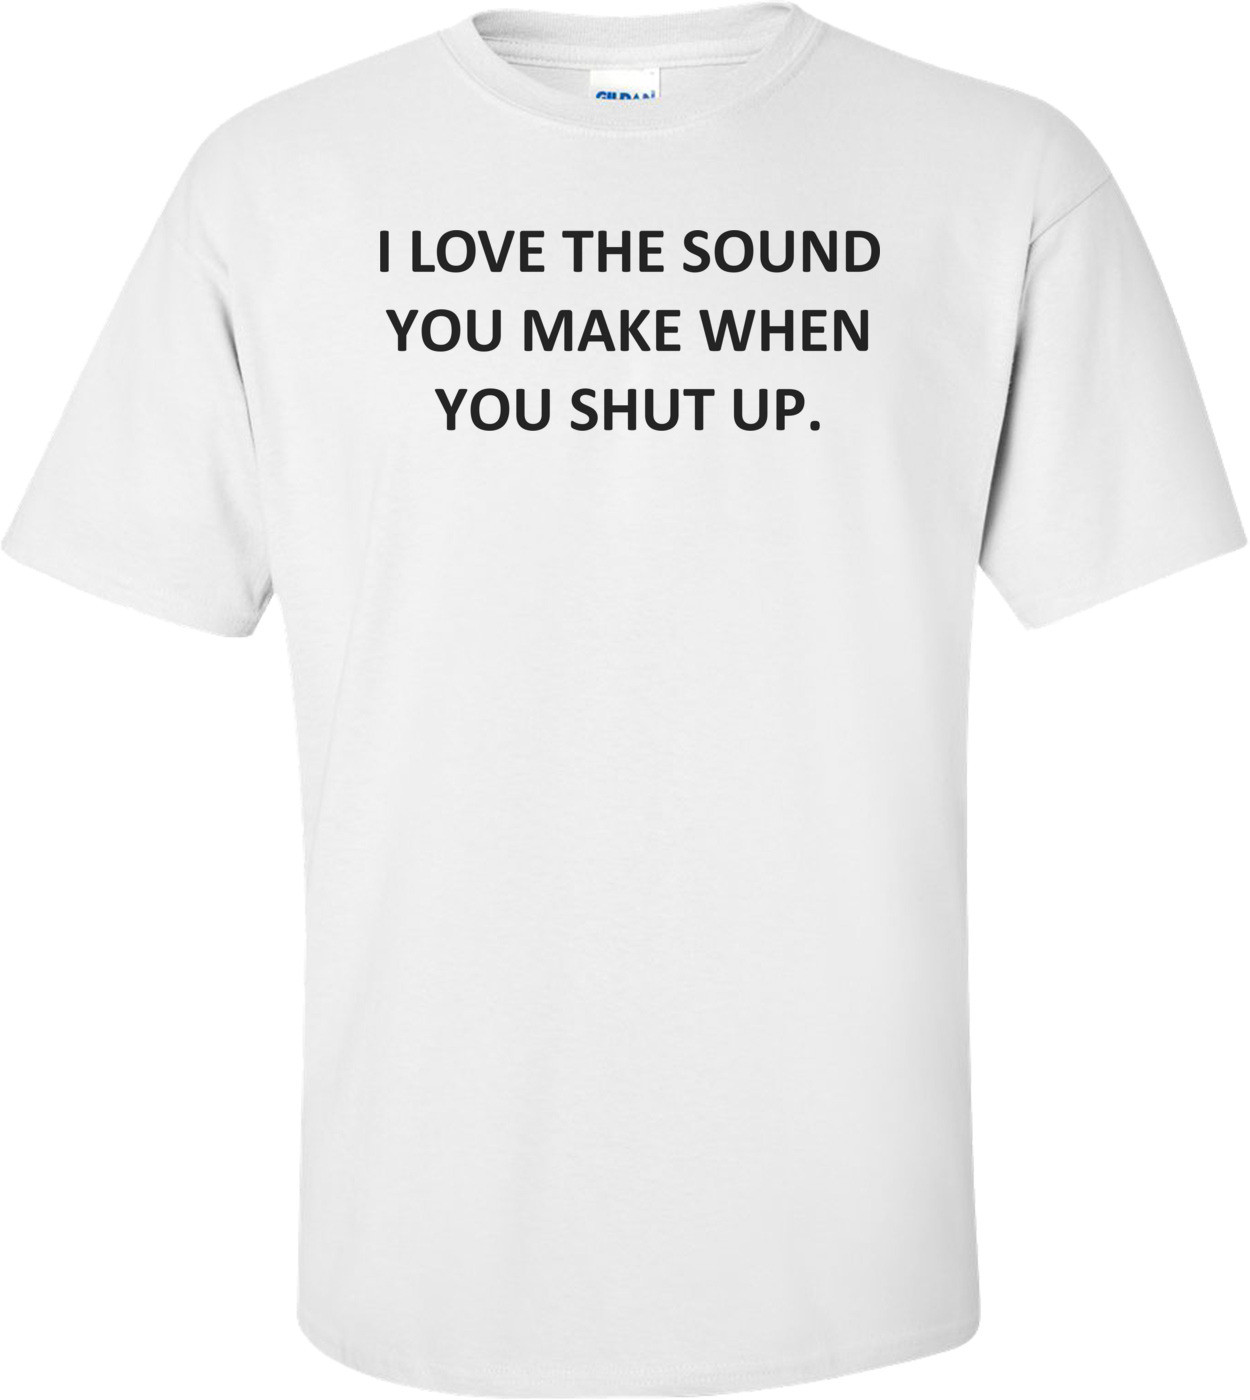 I LOVE THE SOUND YOU MAKE WHEN YOU SHUT UP. Shirt